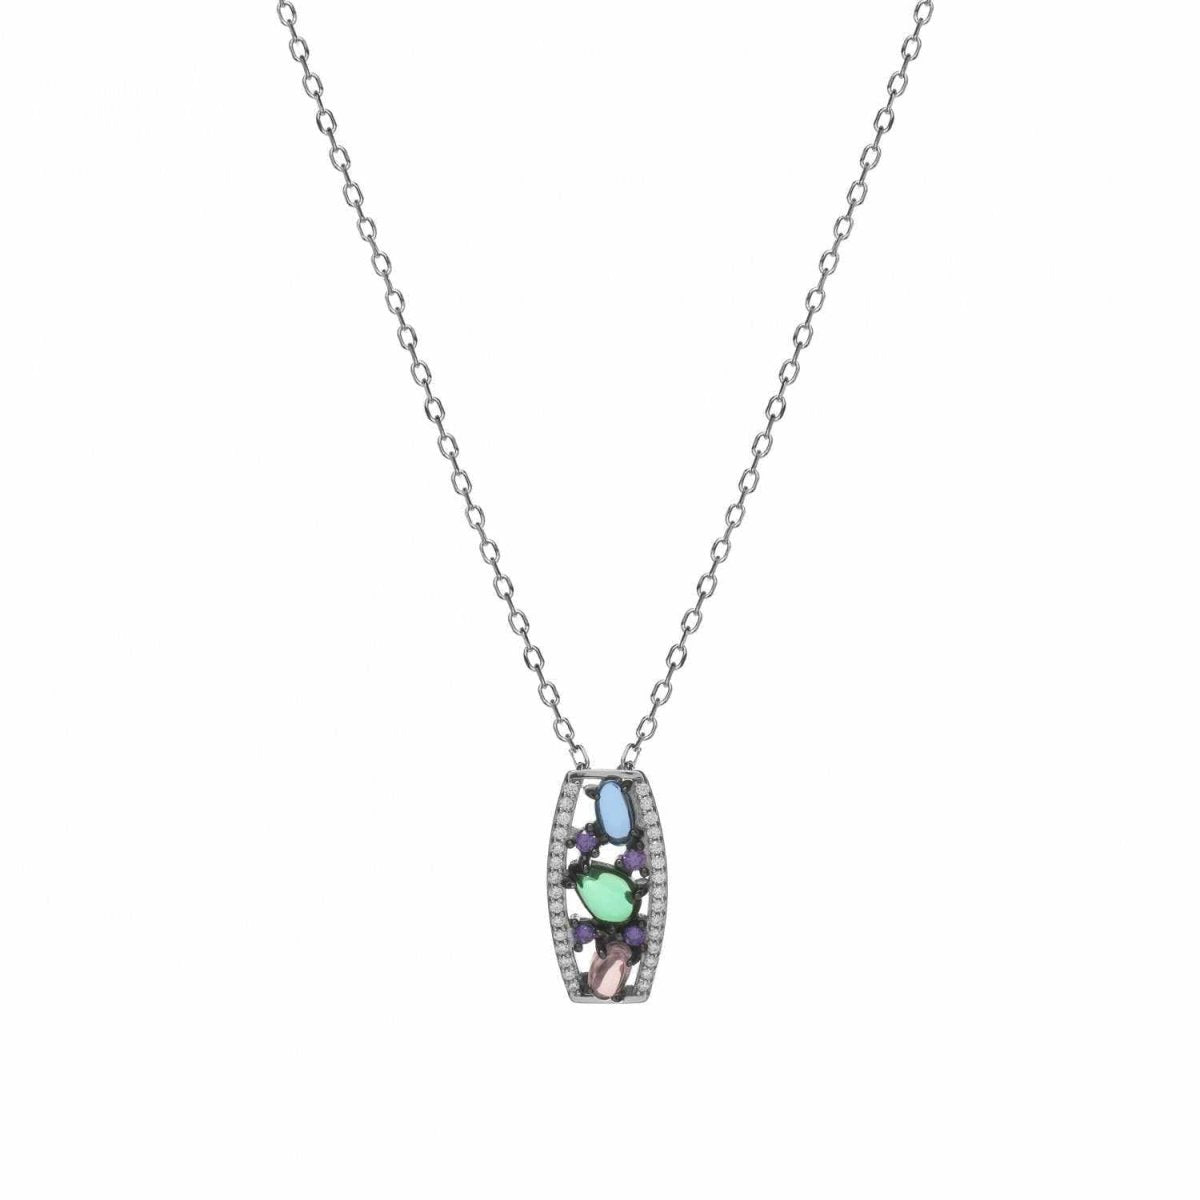 Necklace - Necklaces with stones mosaic design with zirconia stones